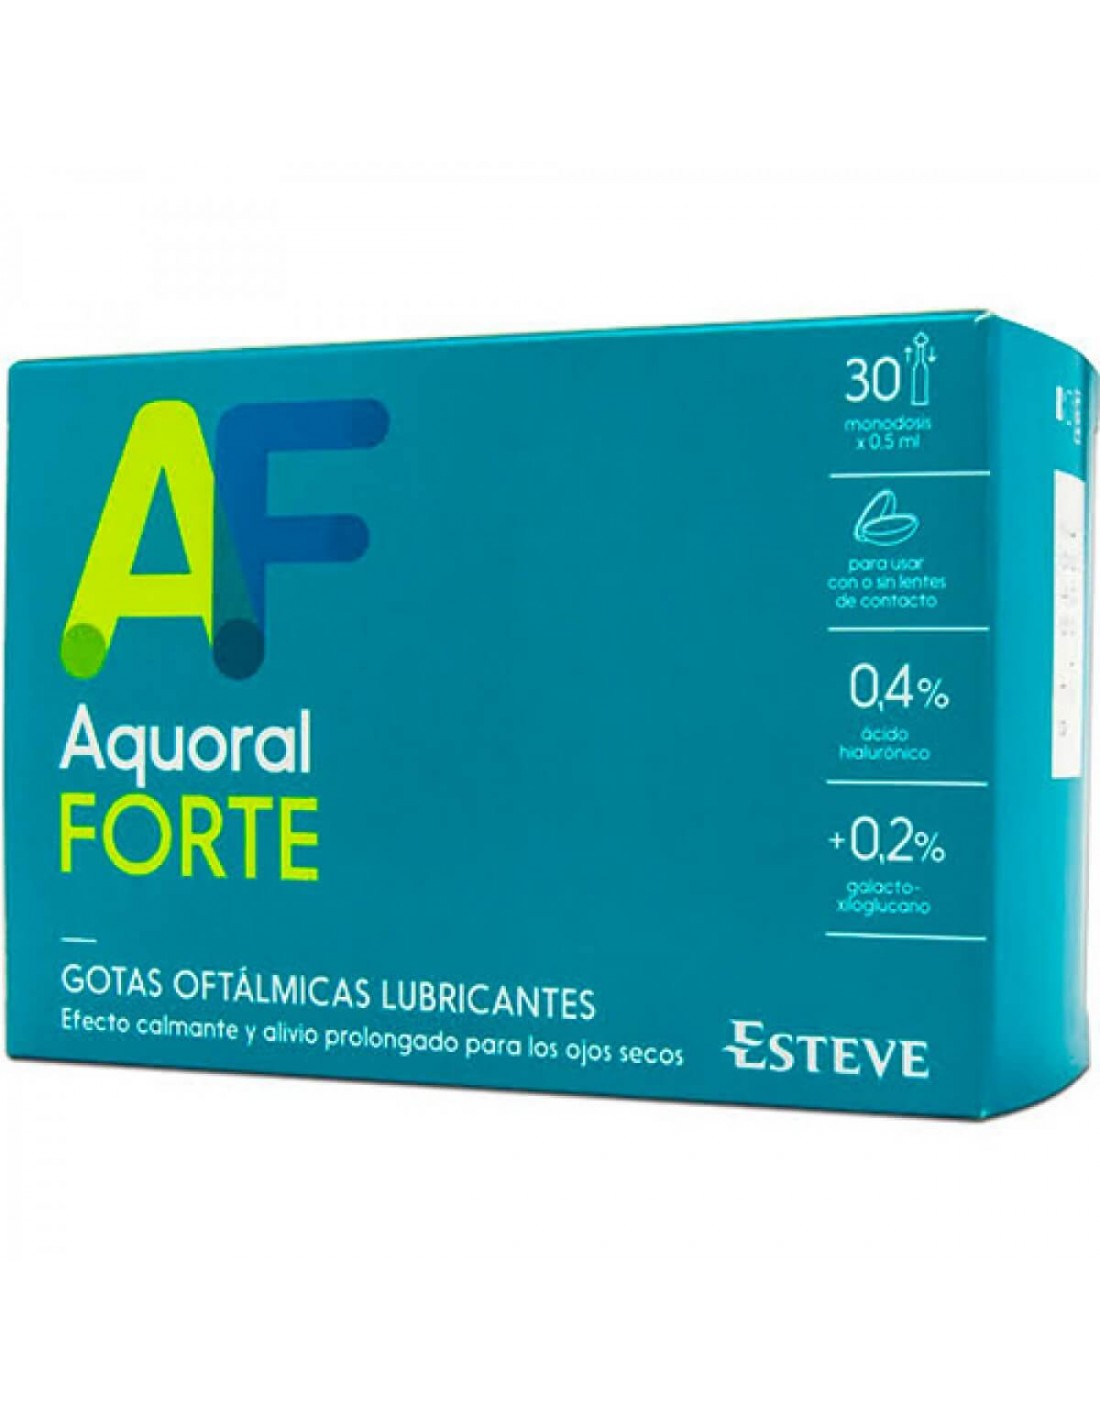 Aquoral Forte Monodosis 30x0,5ml.